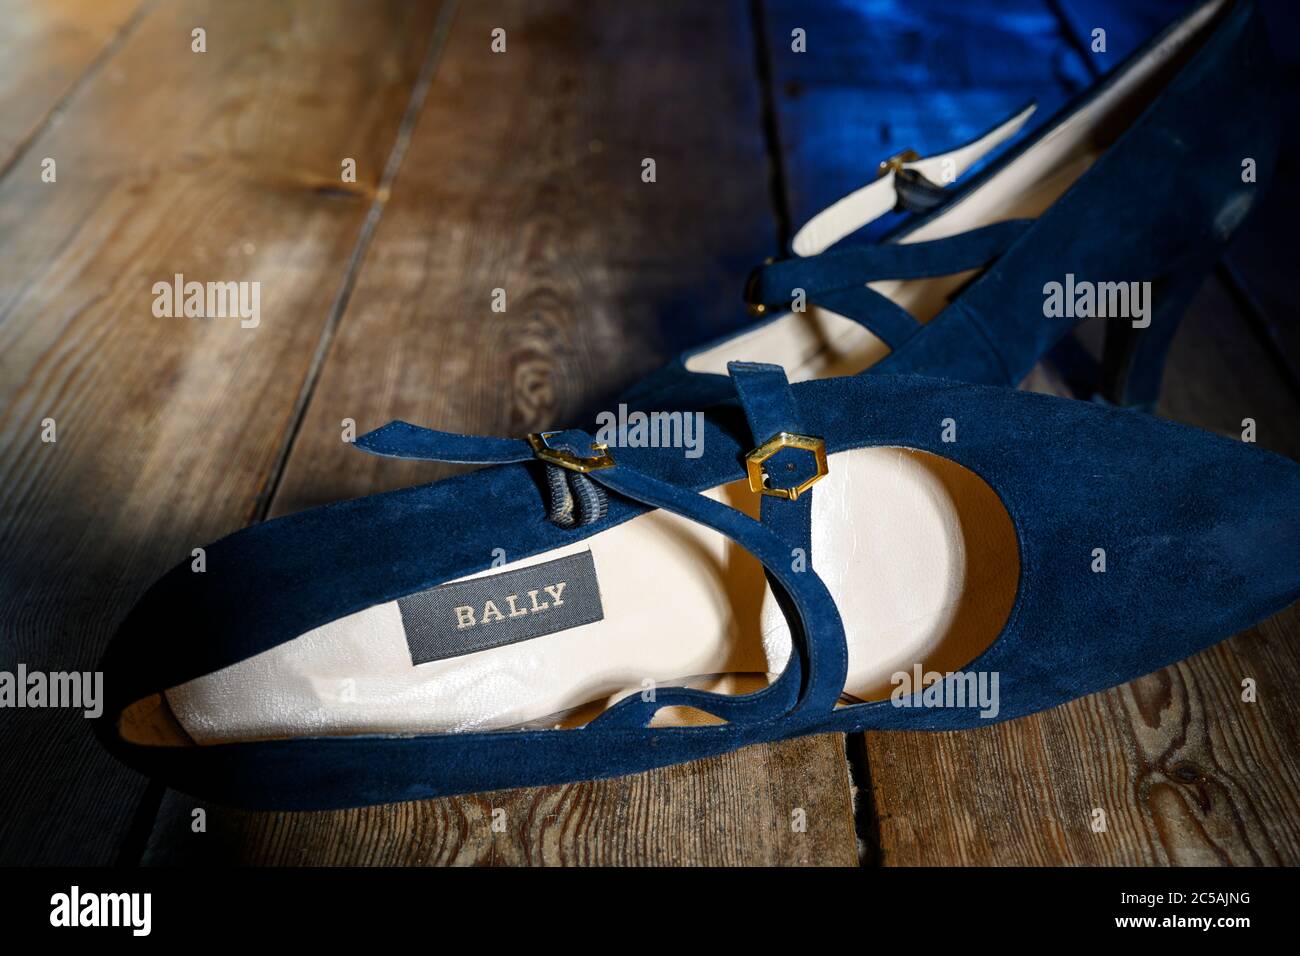 Bally ladies shoes Stock Photo